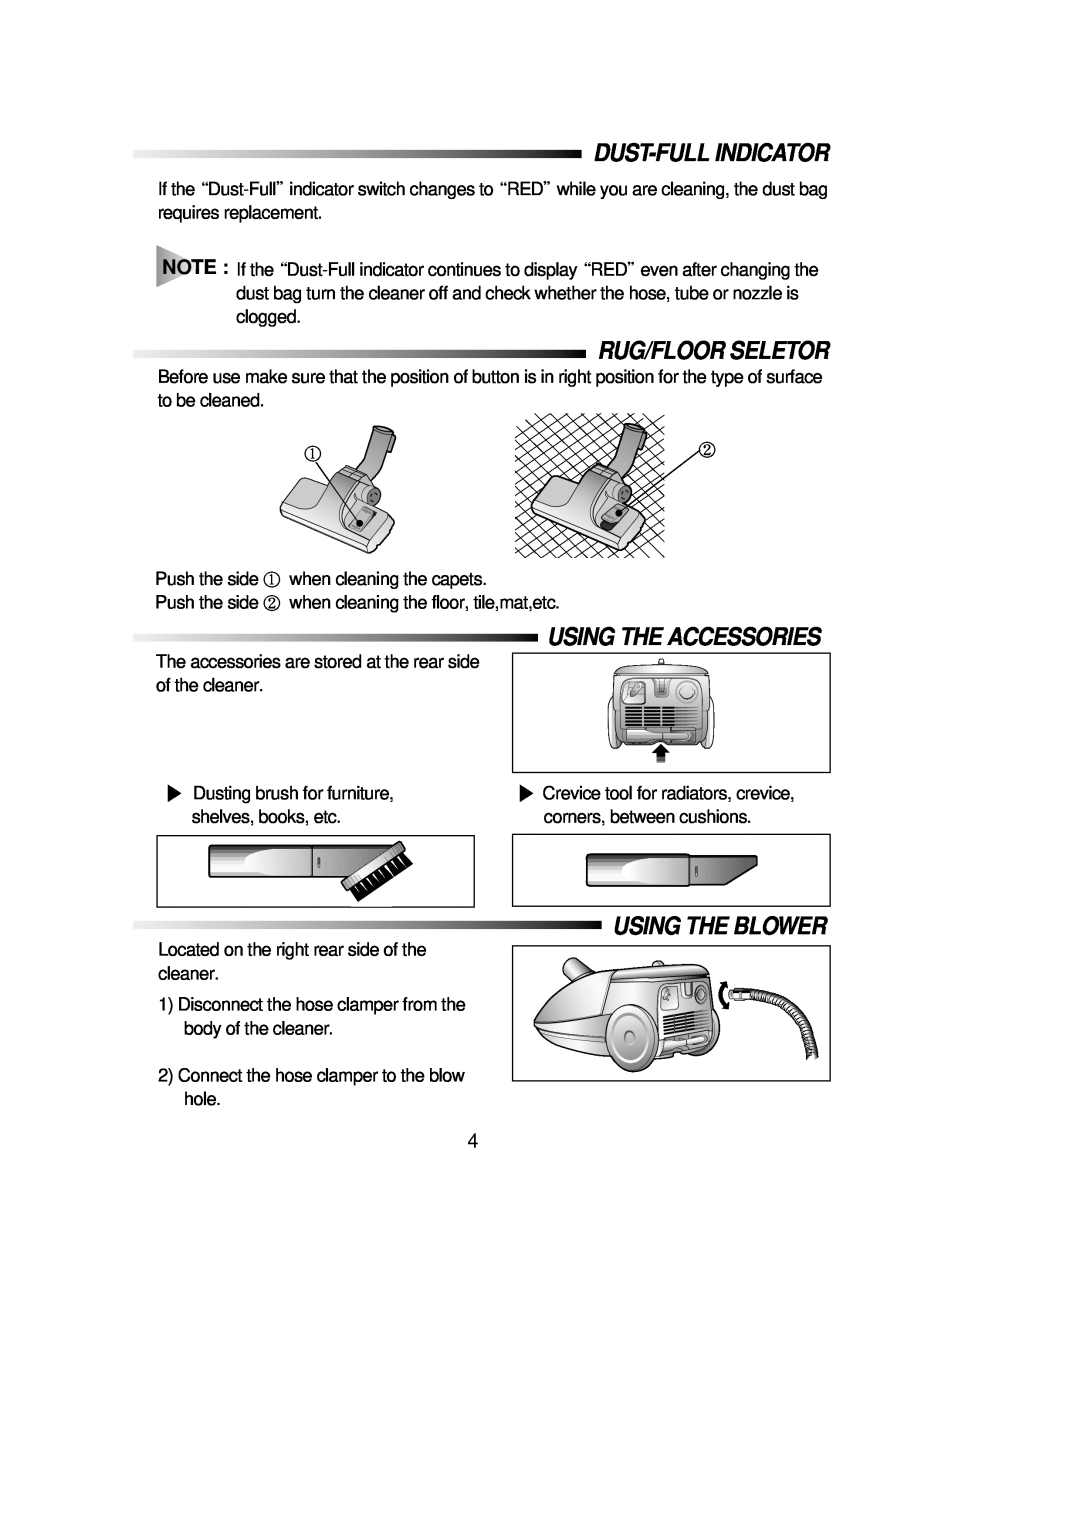 Samsung RC-5513V manual Using The Accessories, Dust-Fullindicator, Rug/Floor Seletor, Using The Blower 